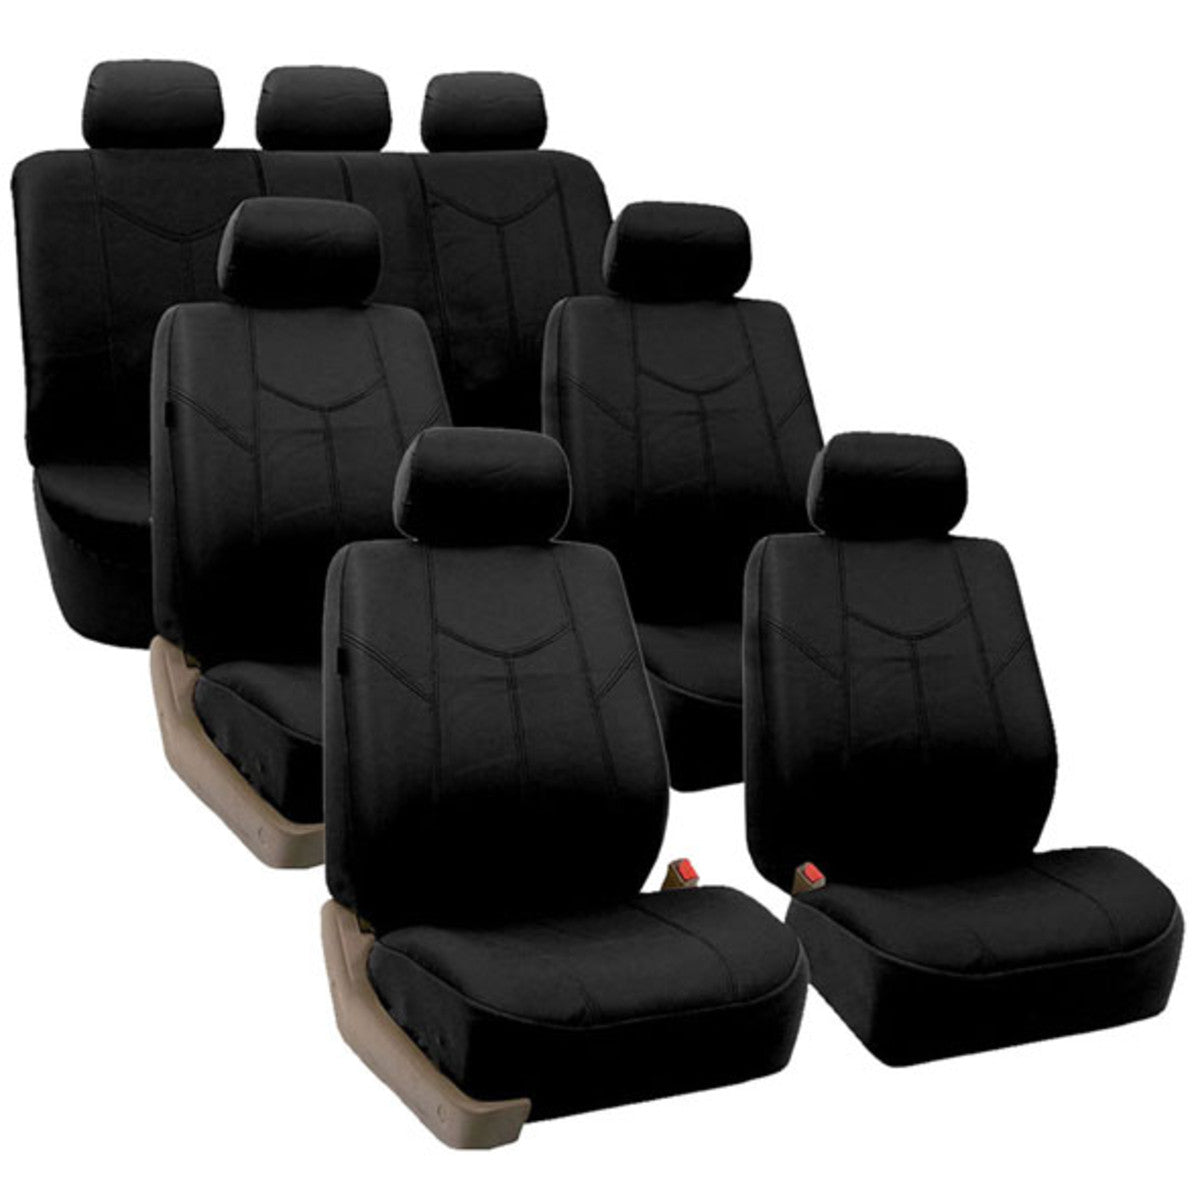 Full Set Seat Covers